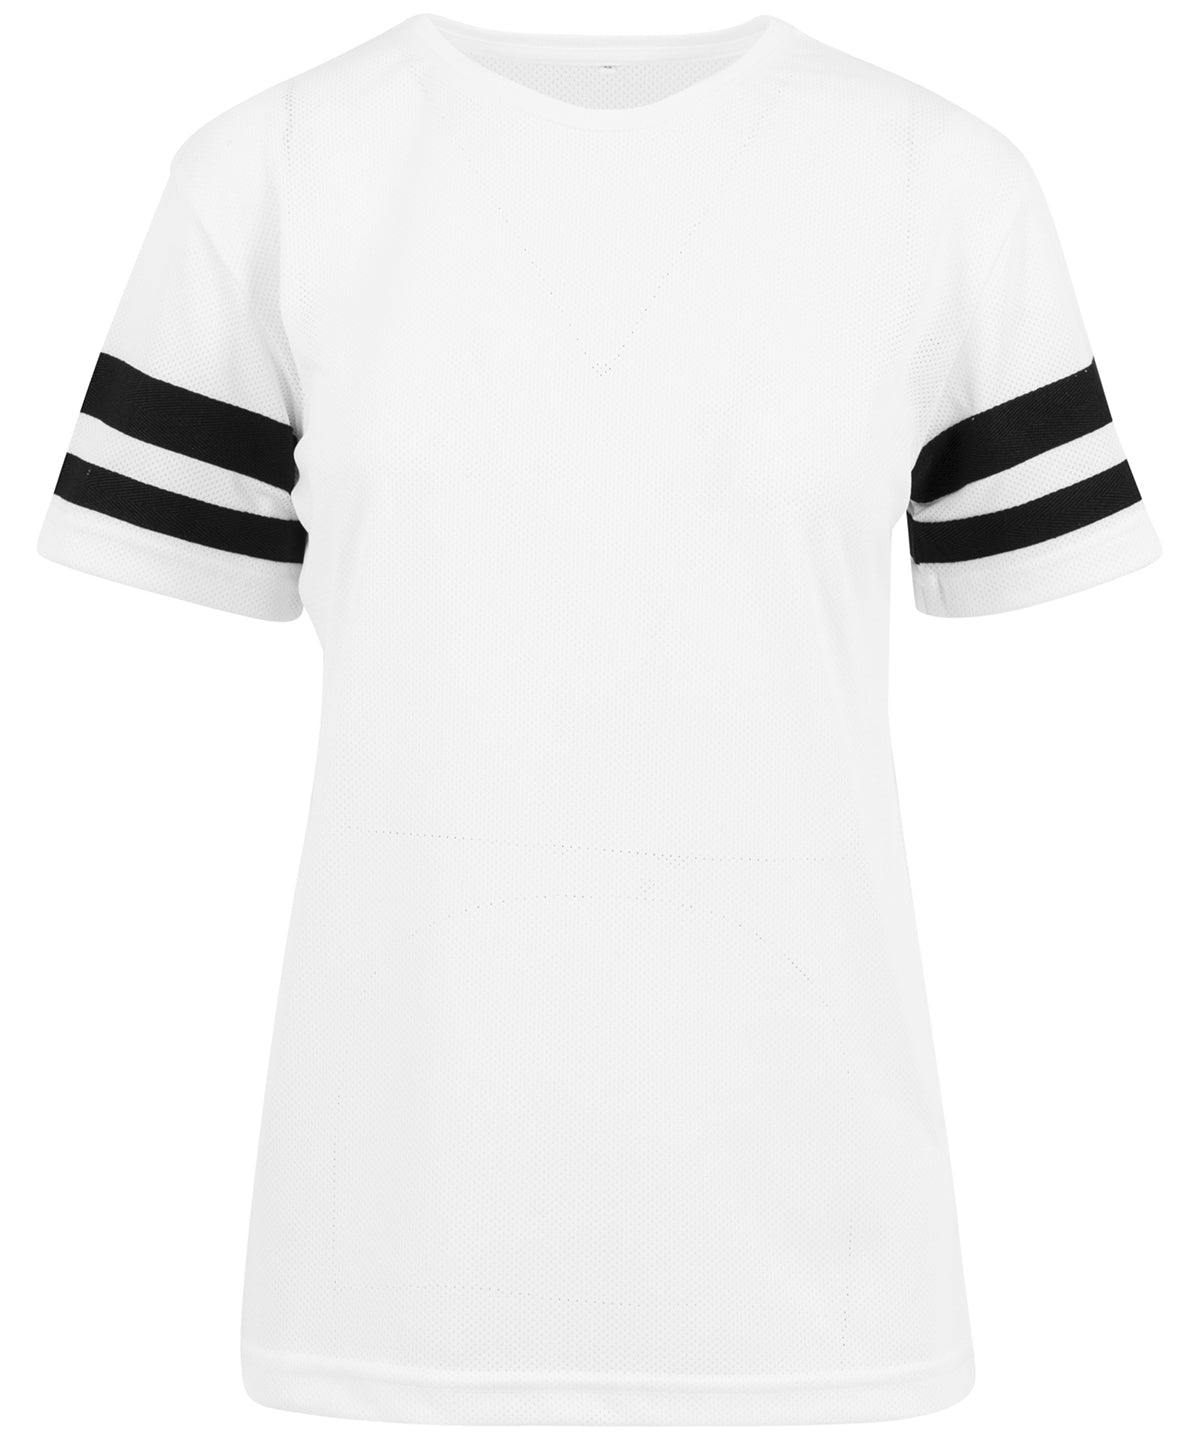 Personalised T-Shirts - Black Build Your Brand Women's mesh stripe tee